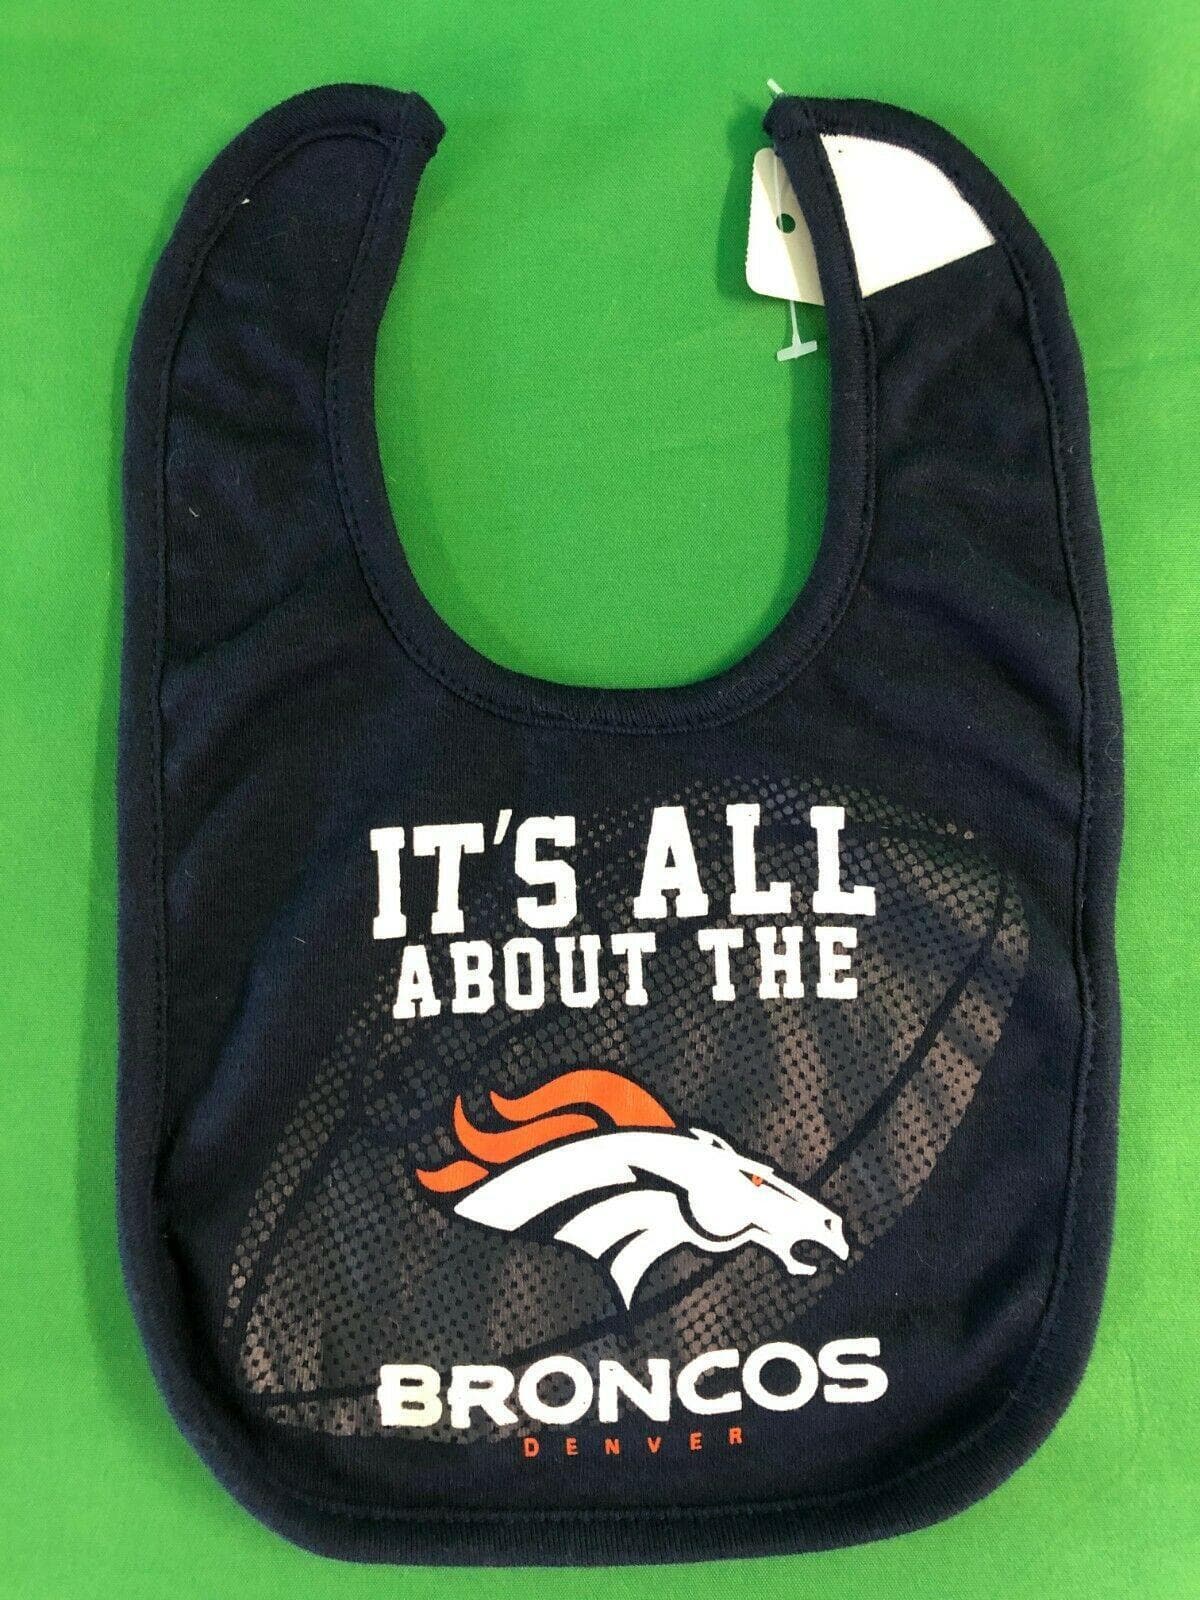 NFL Denver Broncos "All about the Broncos" Baby Bib